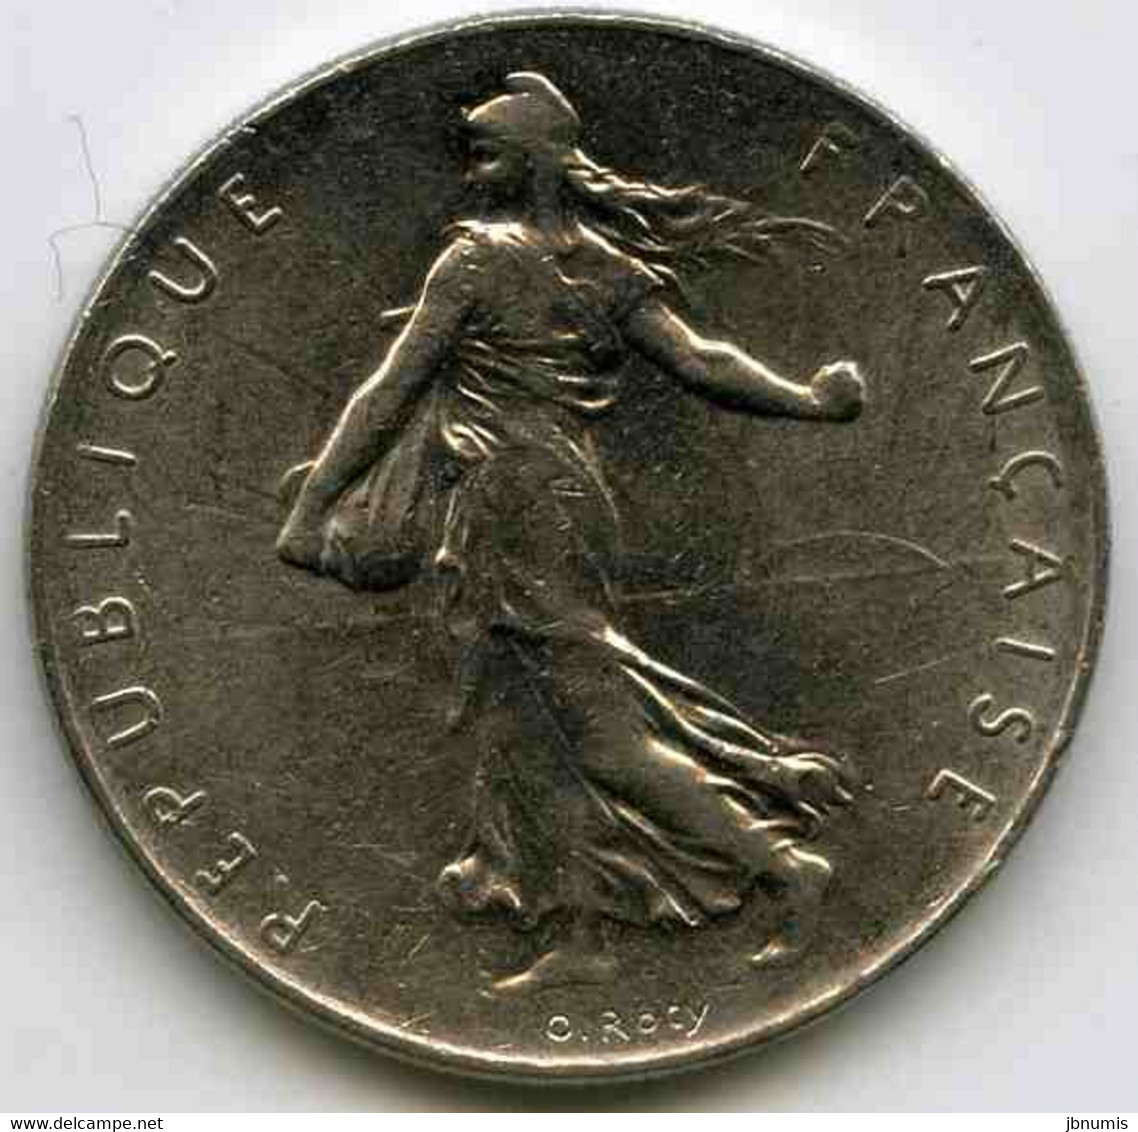 France 1 Franc 1974 GAD 474 KM 925.1 - 1 Franc